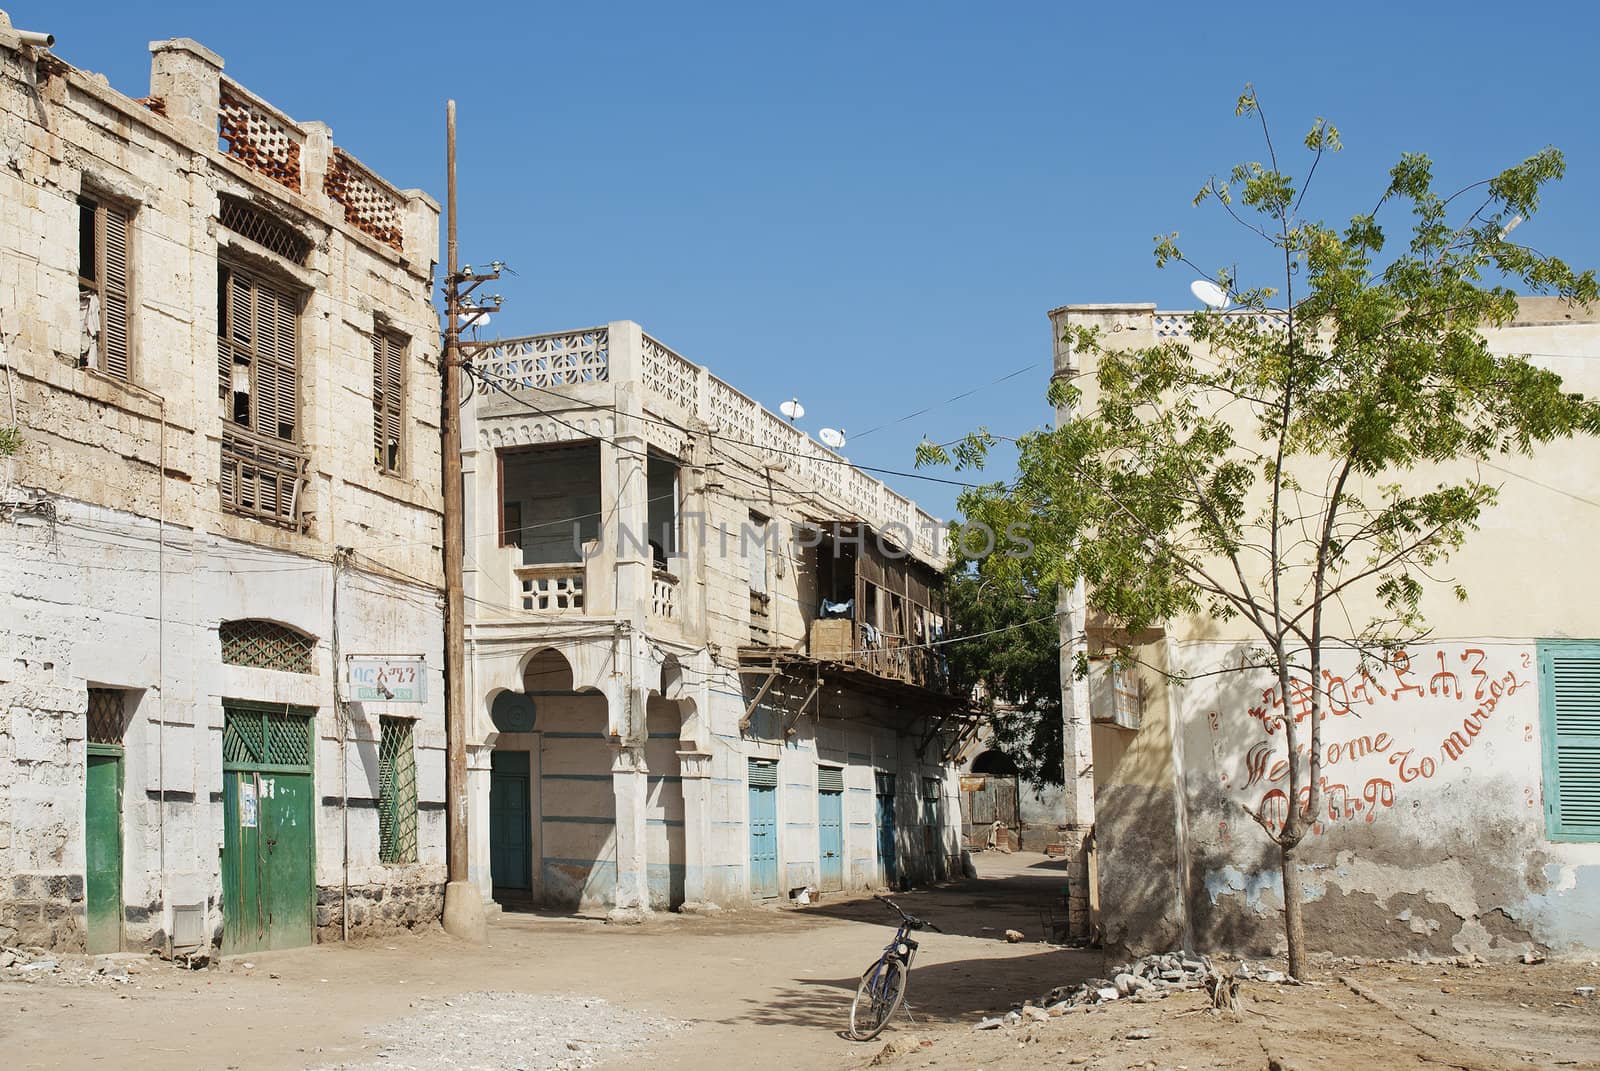 massawa old town in eritrea by jackmalipan